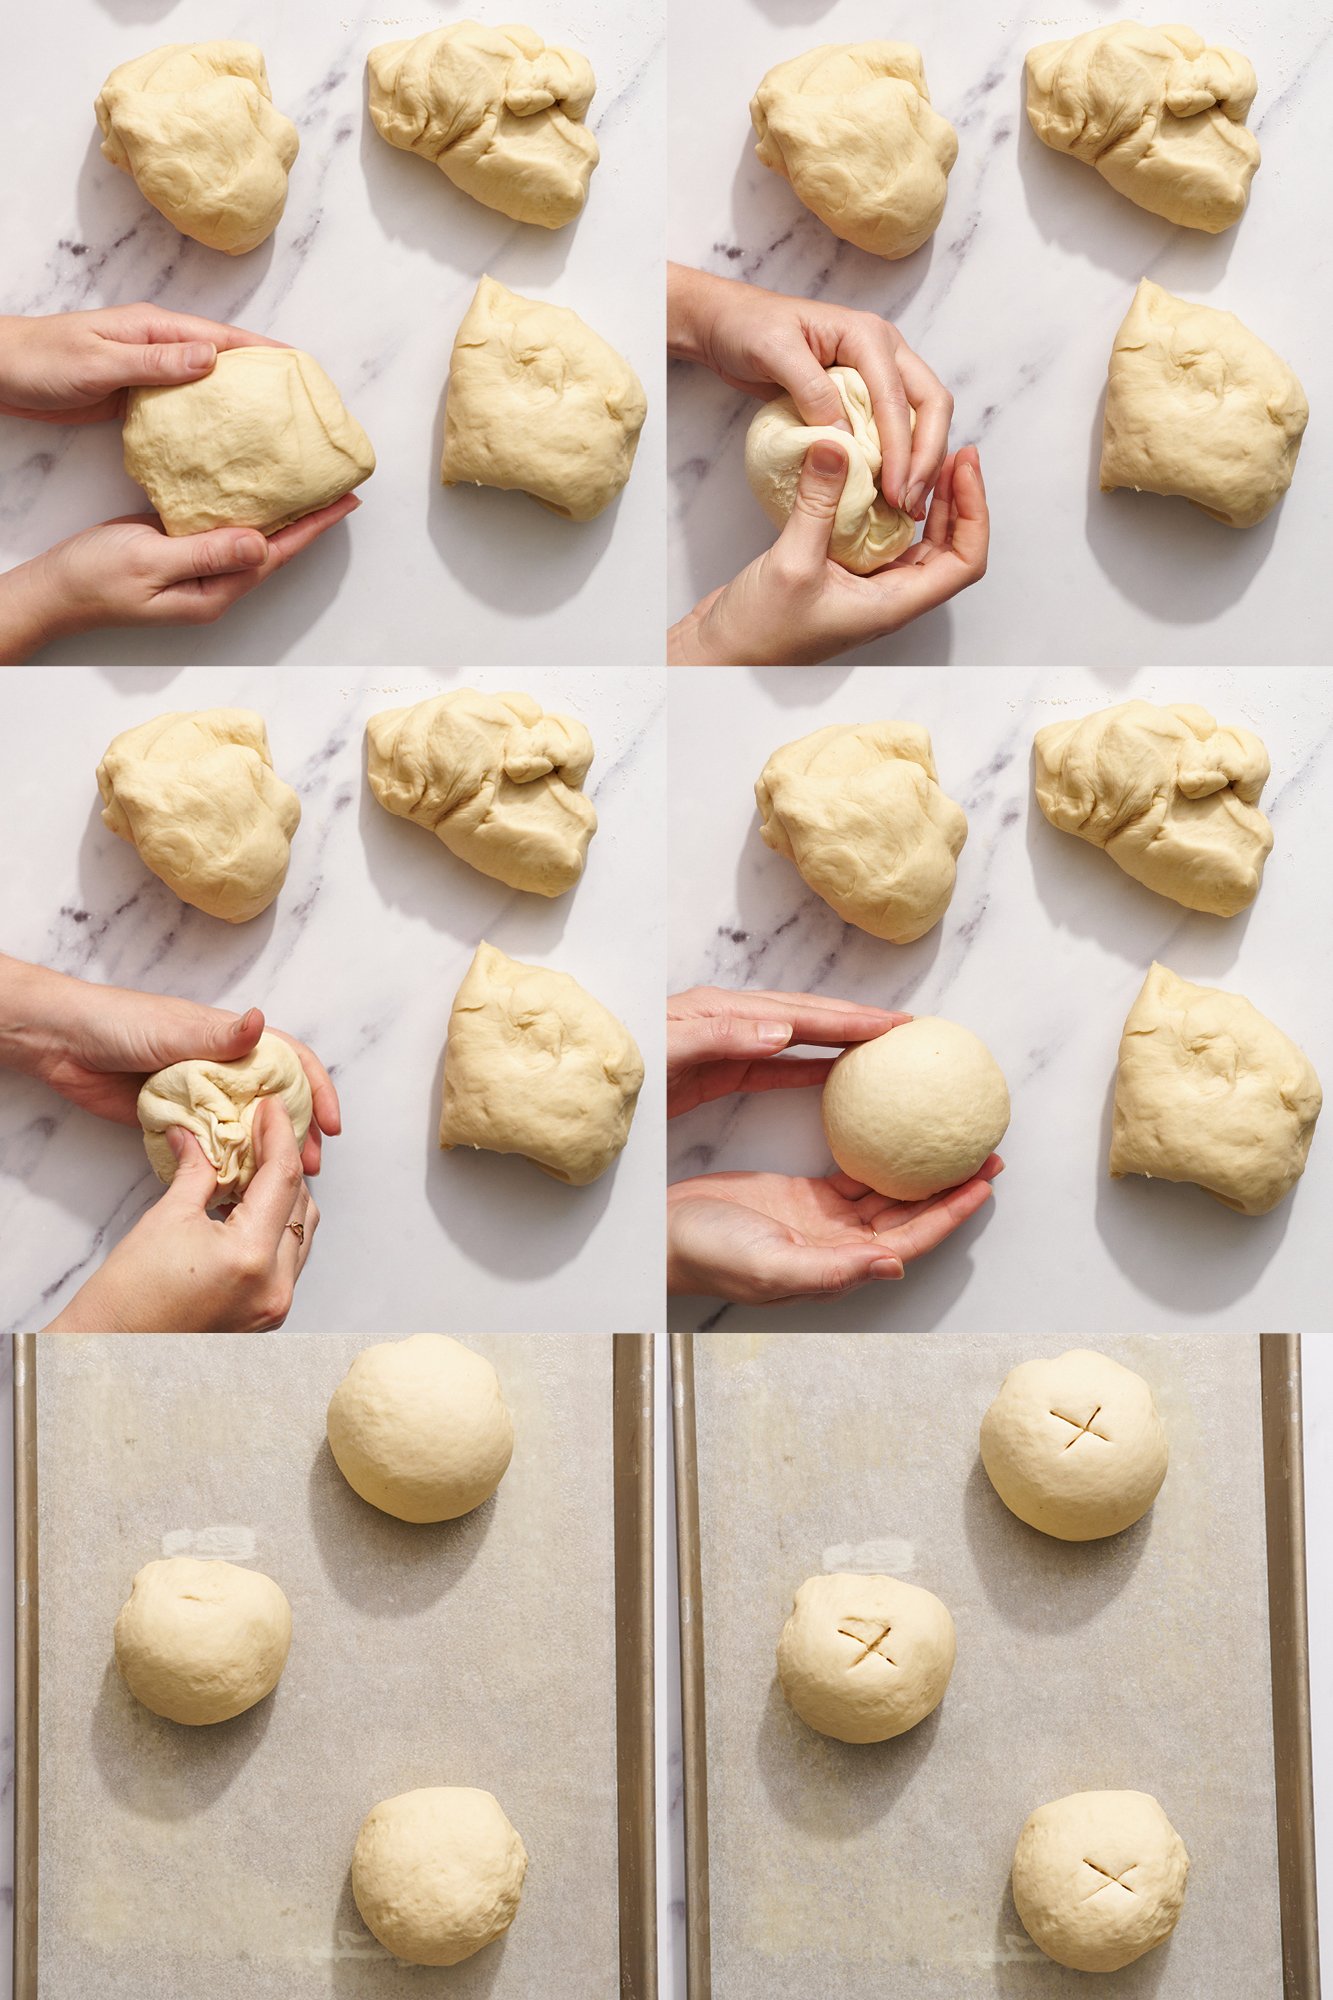 https://handletheheat.com/wp-content/uploads/2014/09/homemade-bread-bowls.jpg